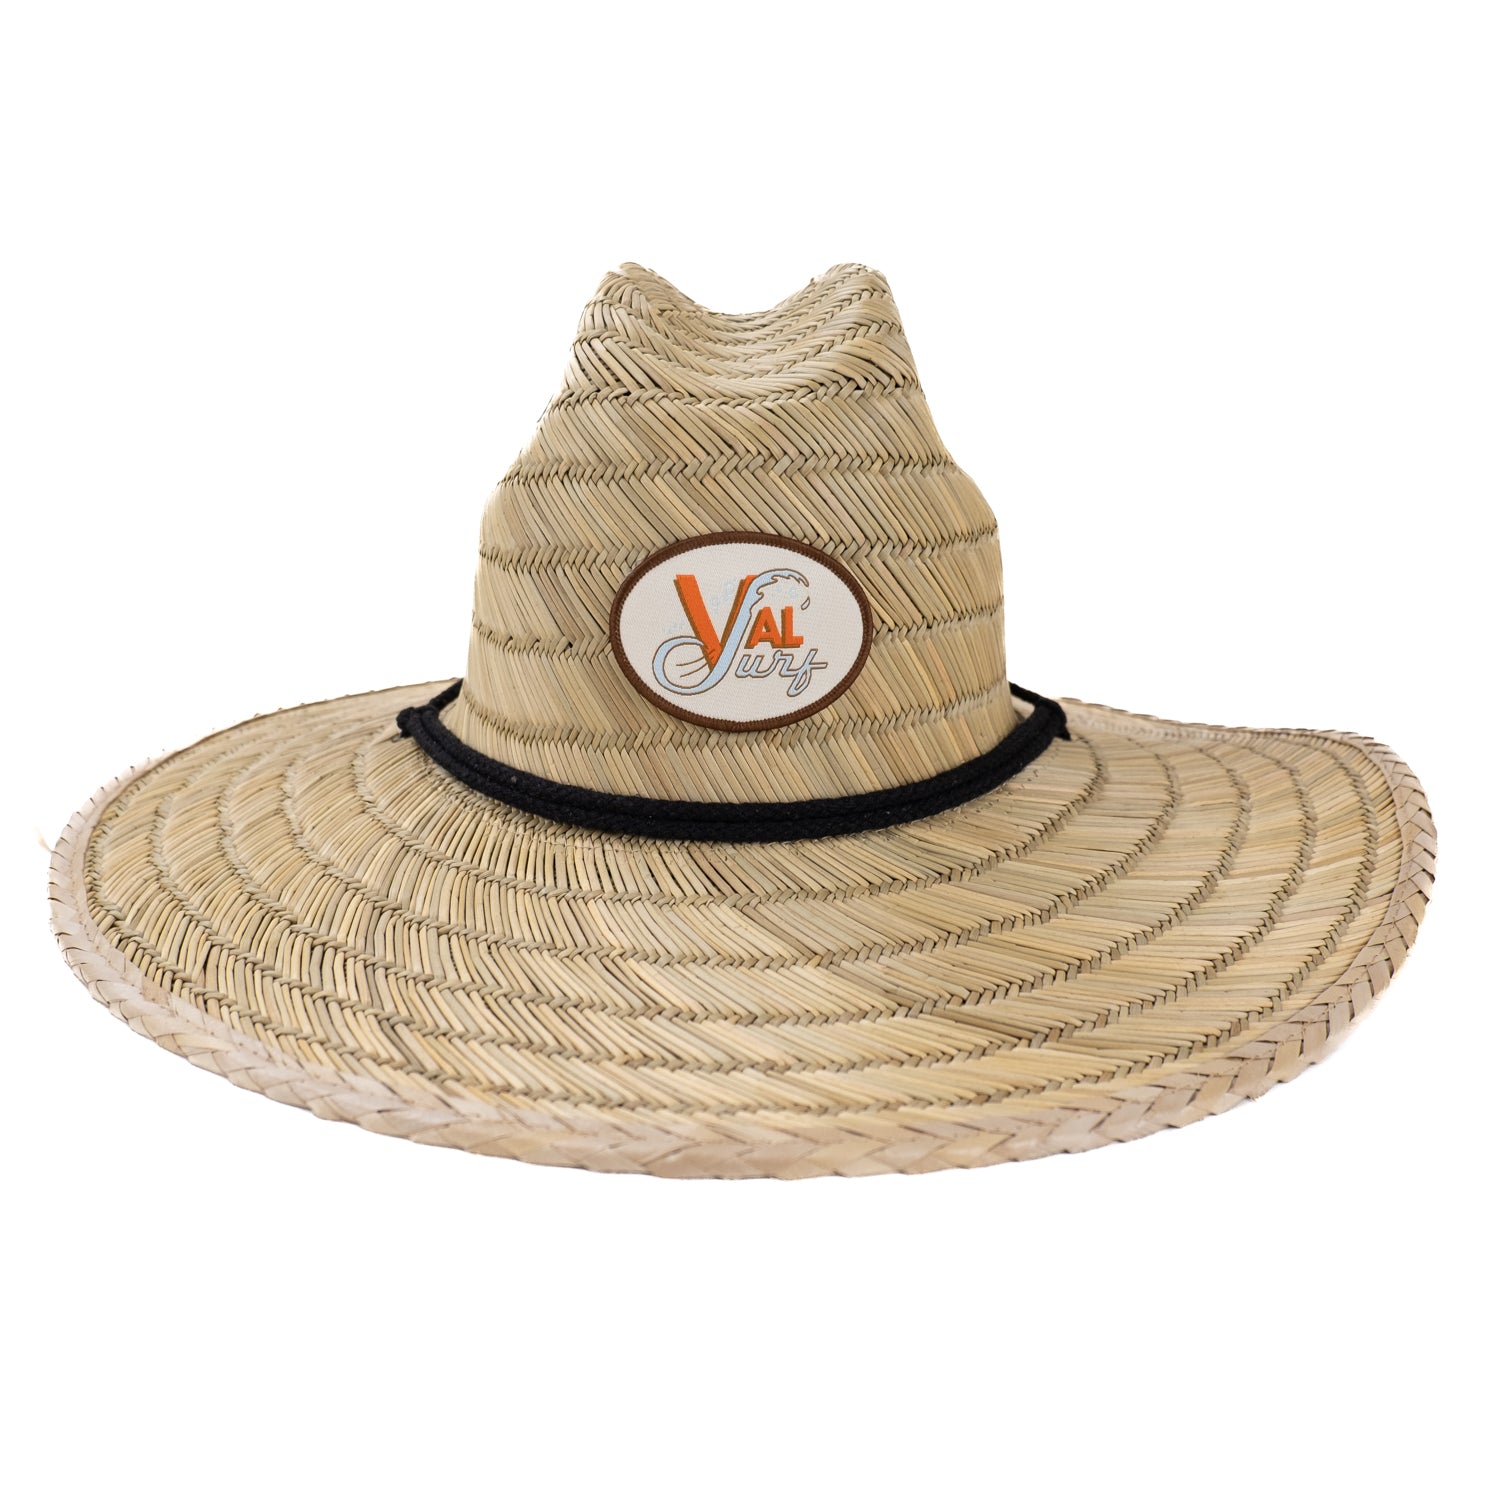 Val Surf Costa LG Hat - Natural